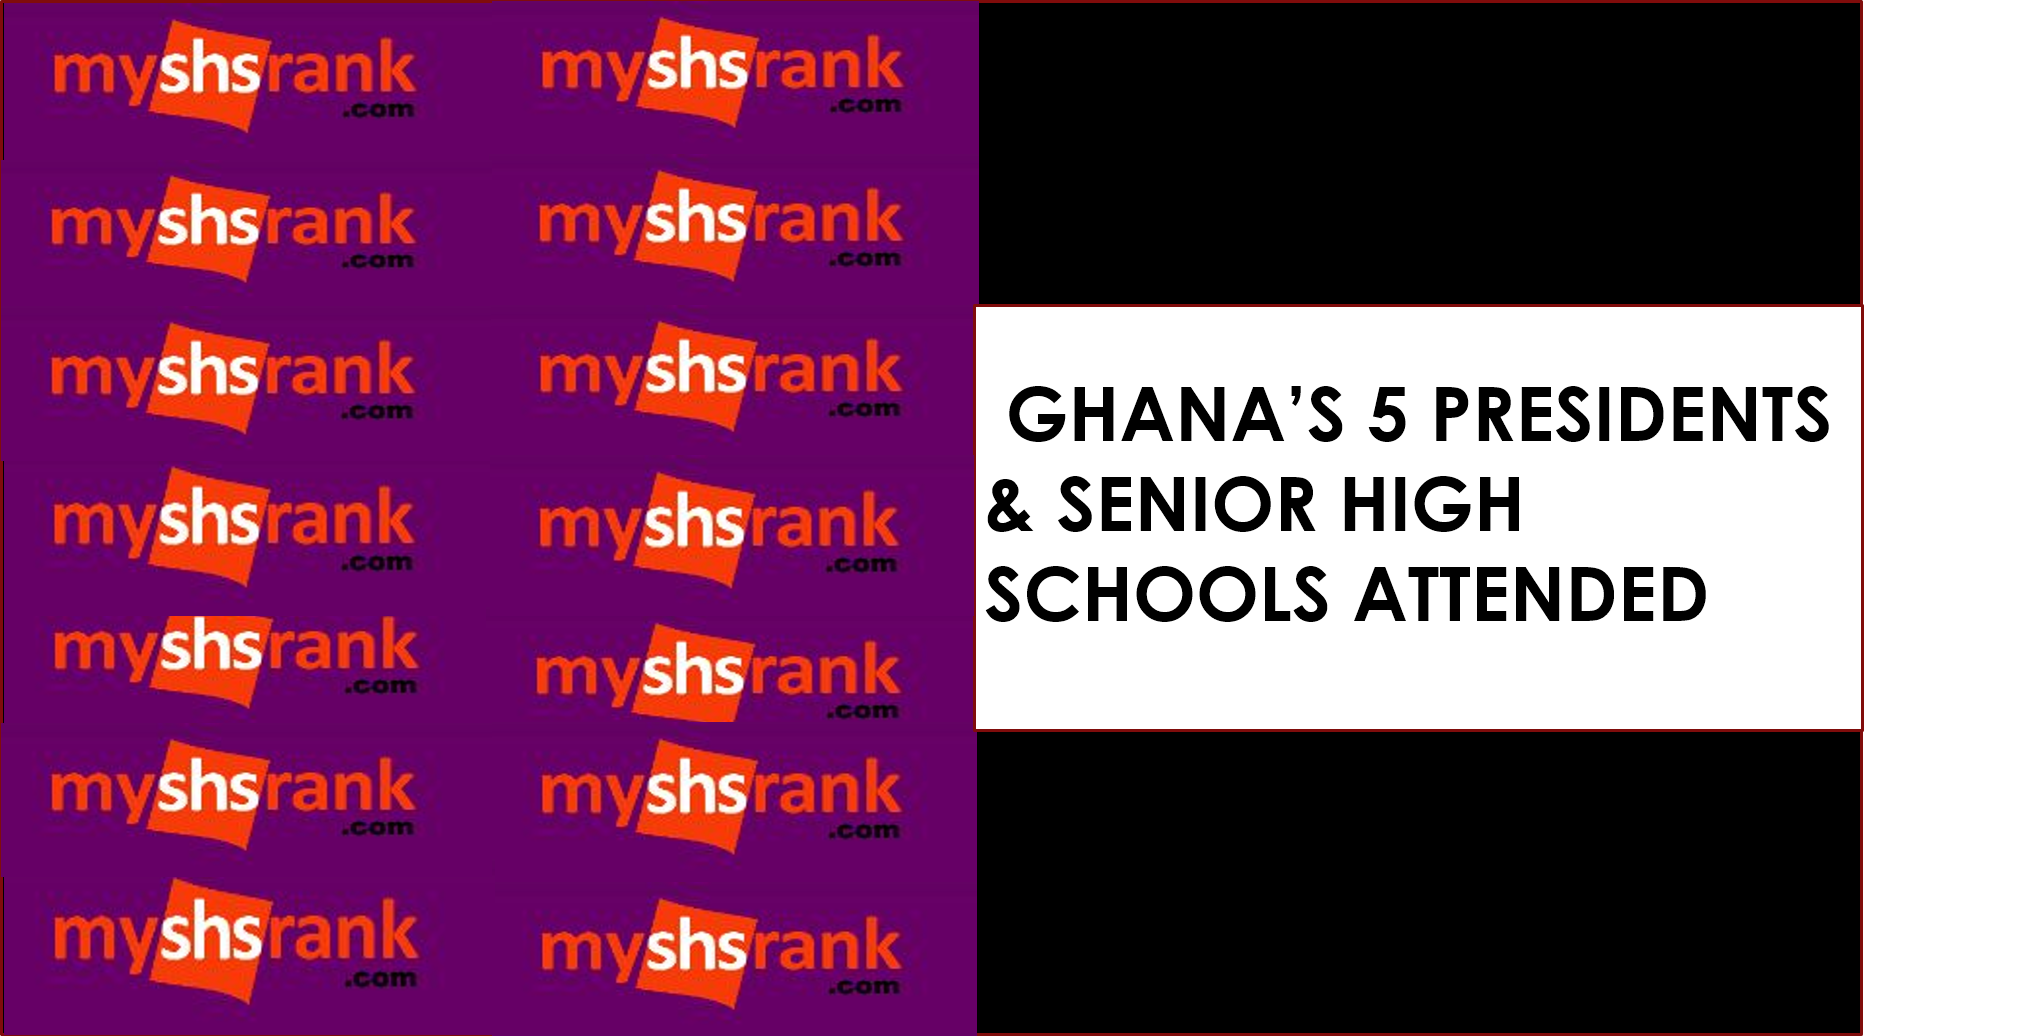 Ghana's presidents and senior high schools